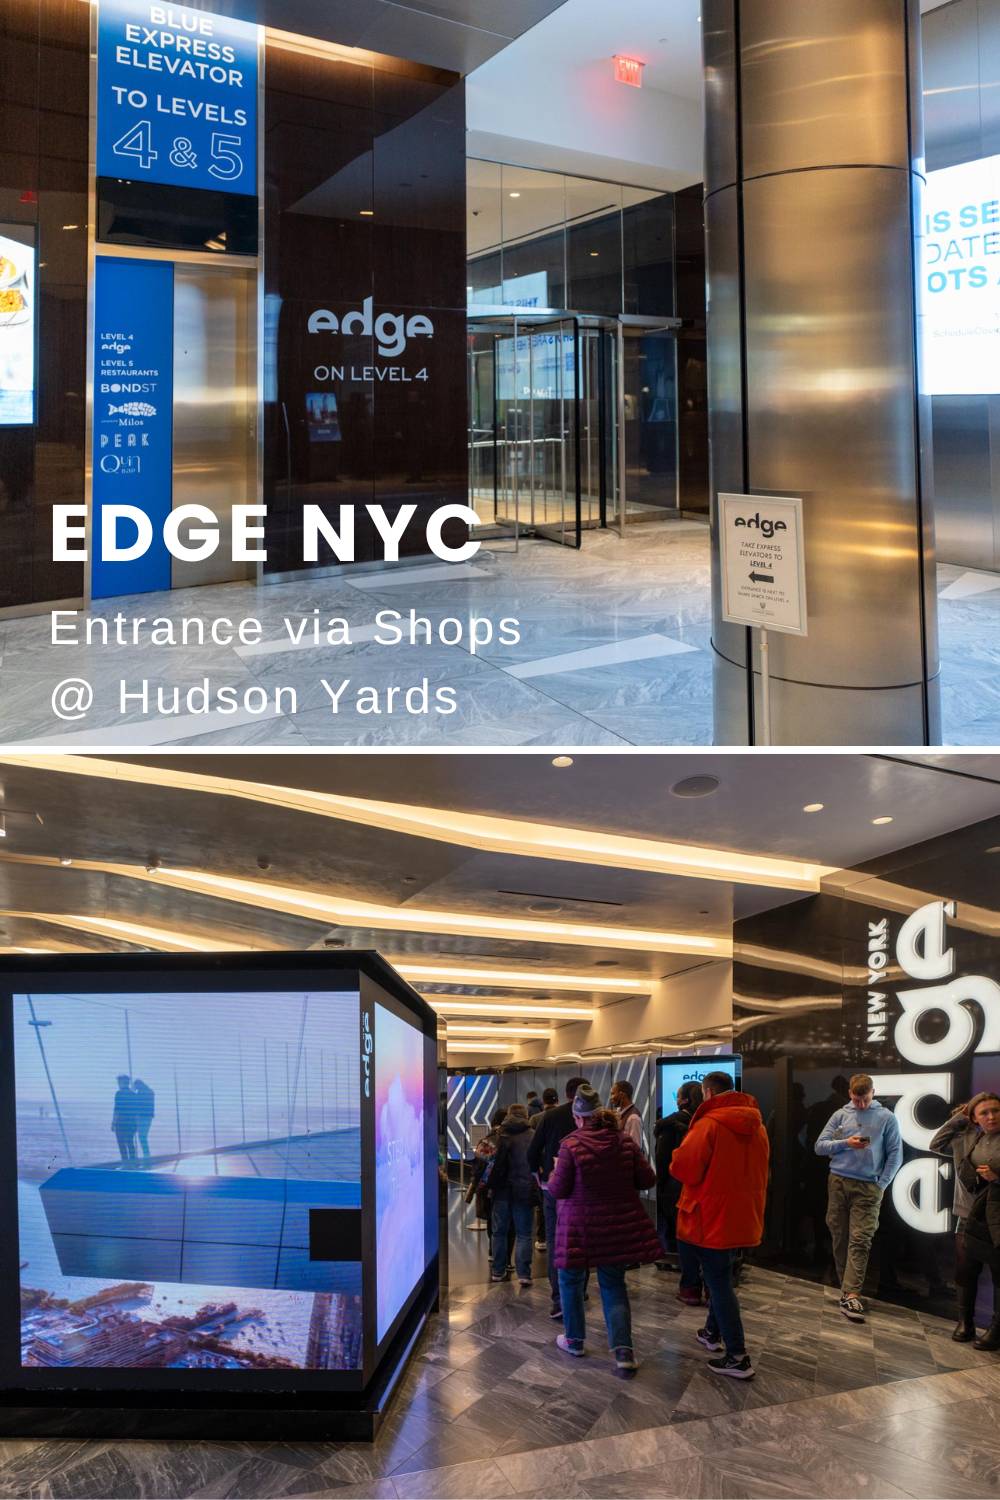 Edge Observation Deck NYC One Entrance Entrance Hudson Yards New York City